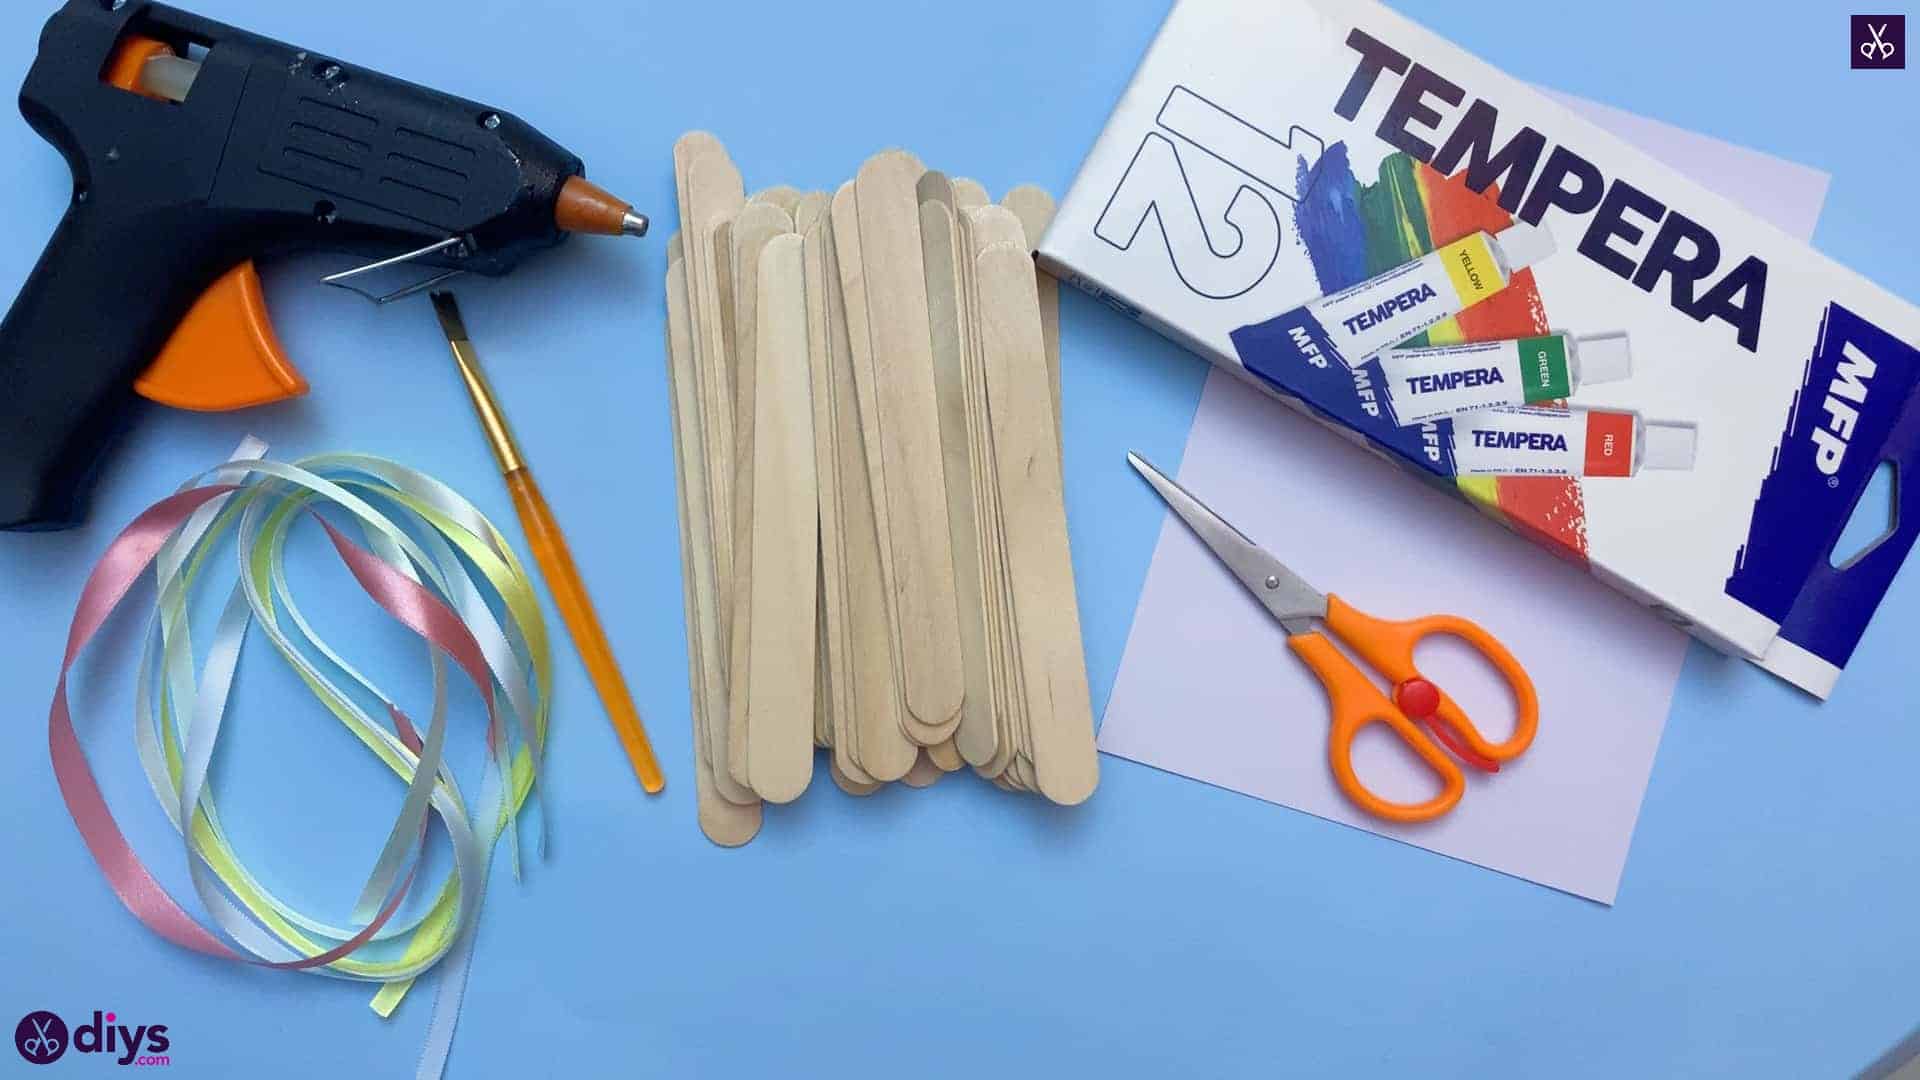 Diy popsicle stick jewelry box materials